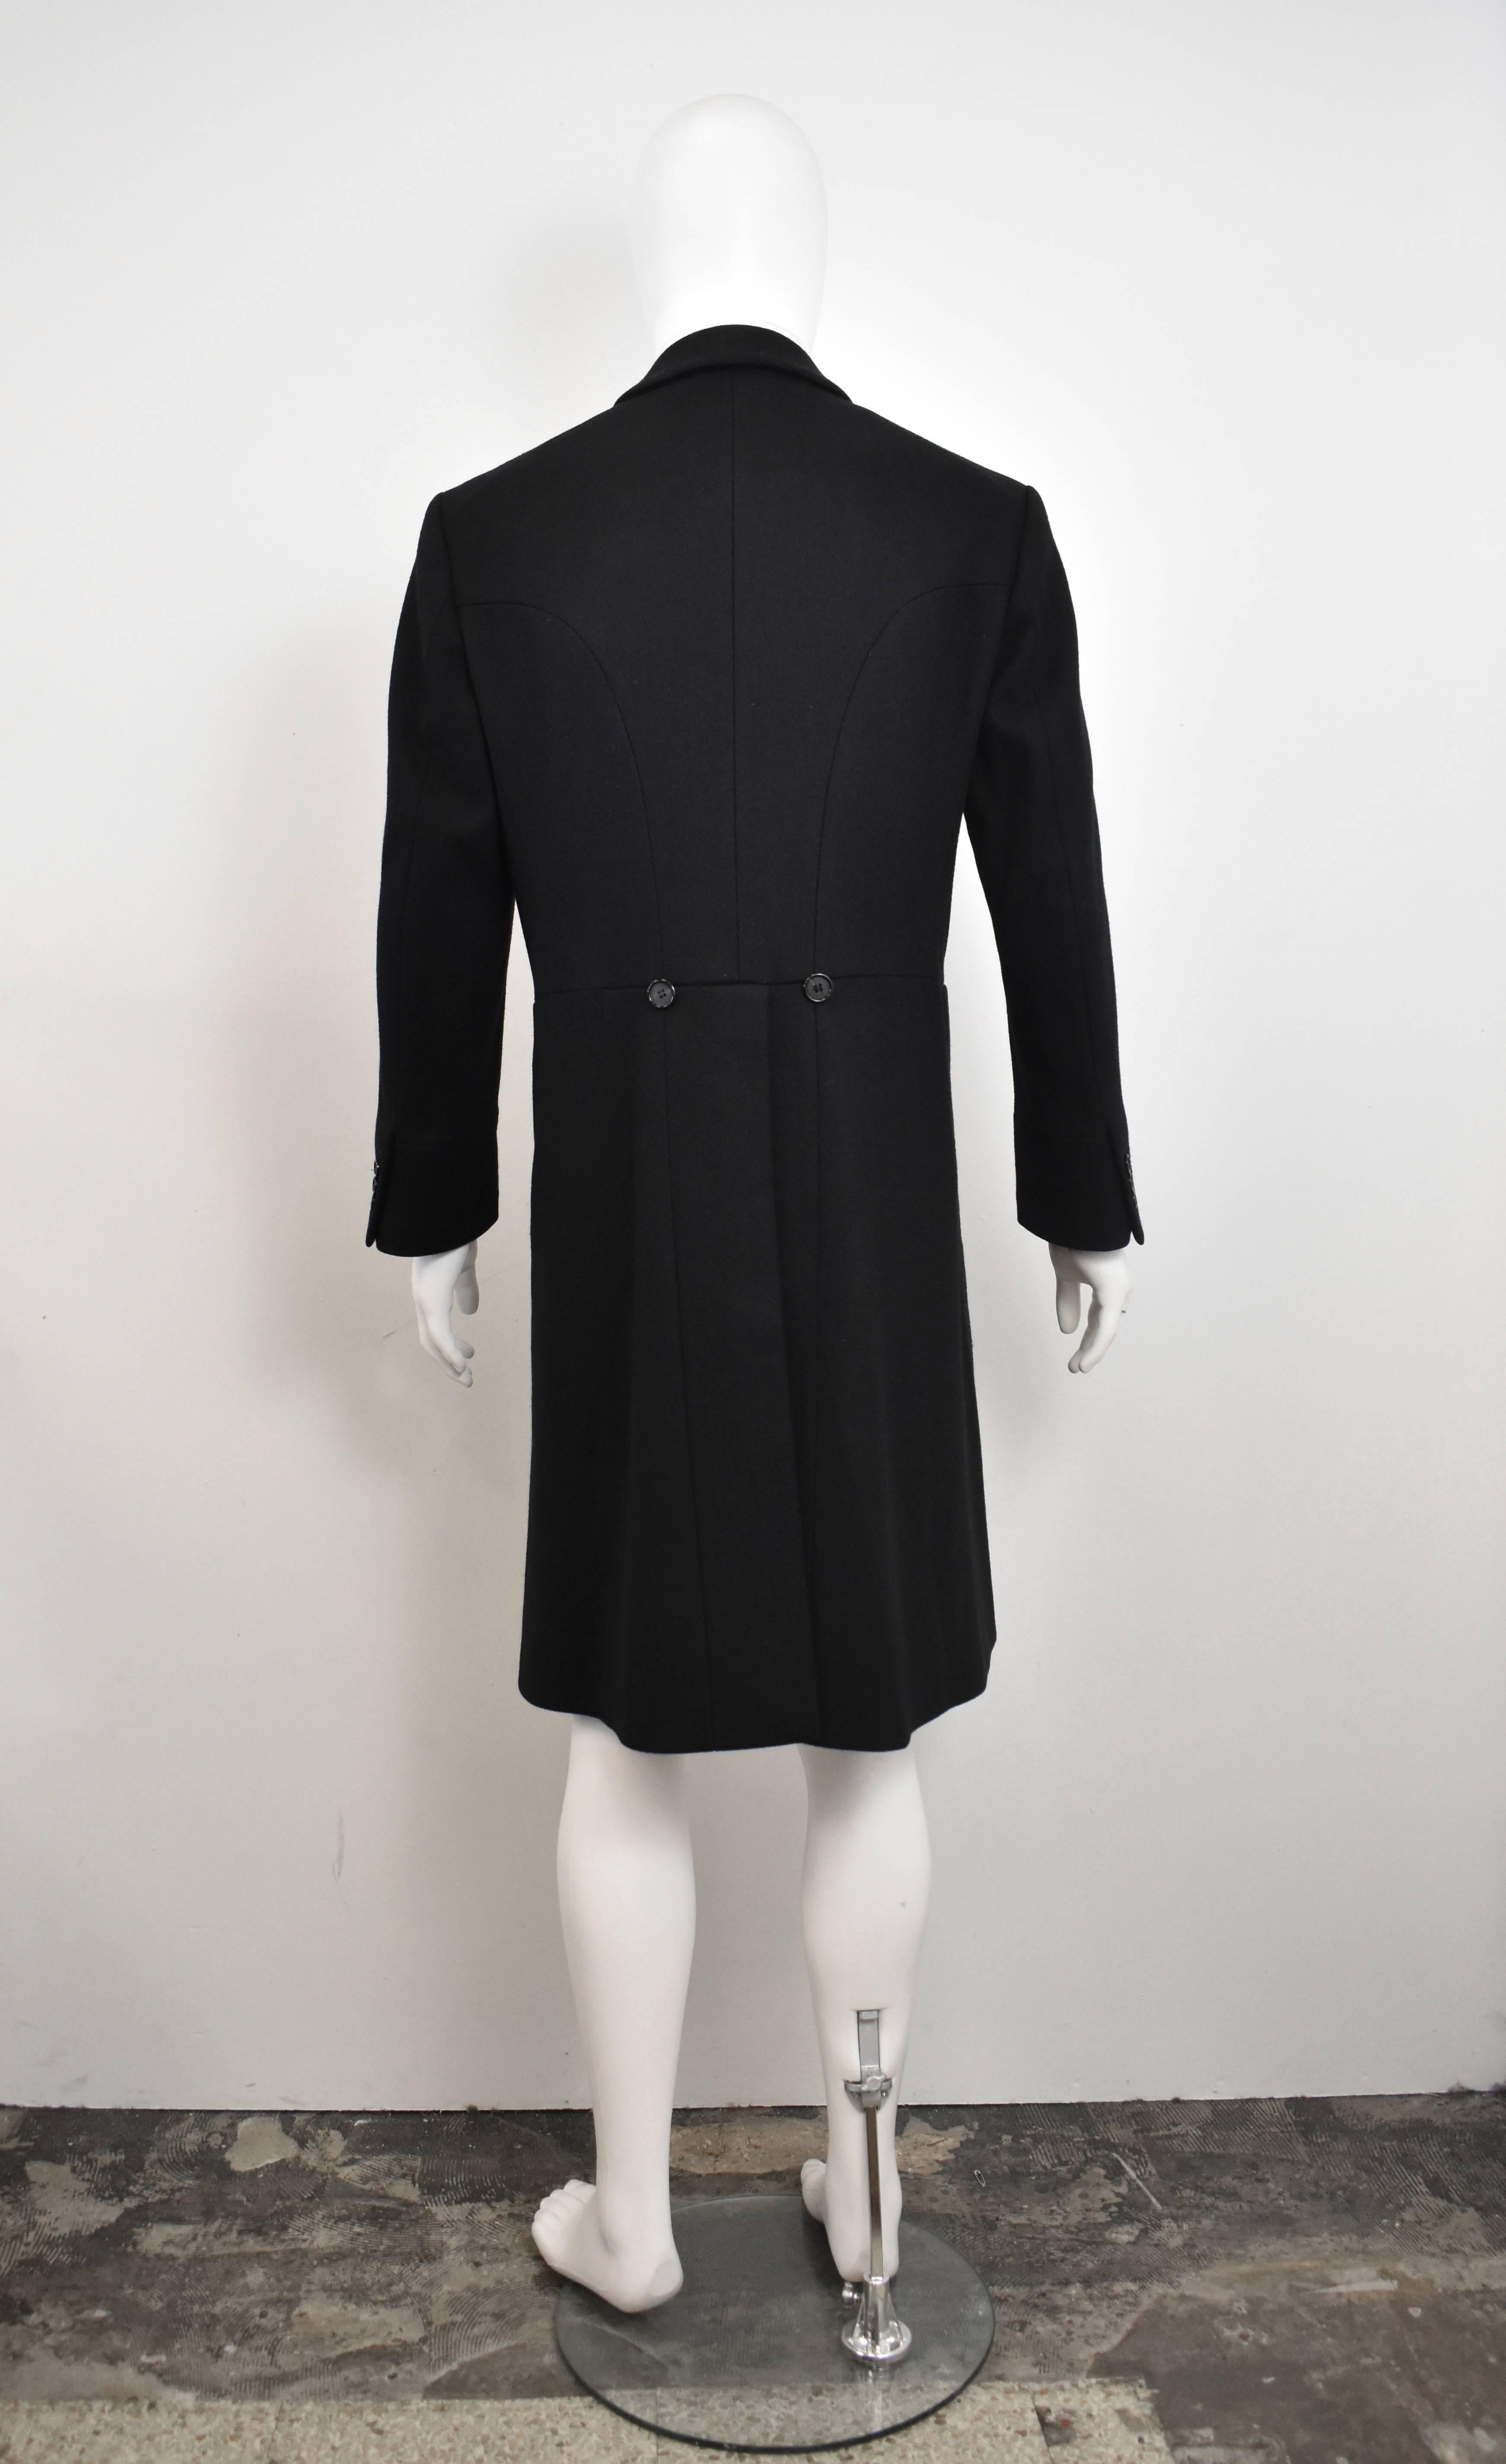 Men's Alexander McQueen Black Wool Double Breasted Coat with Long Vents